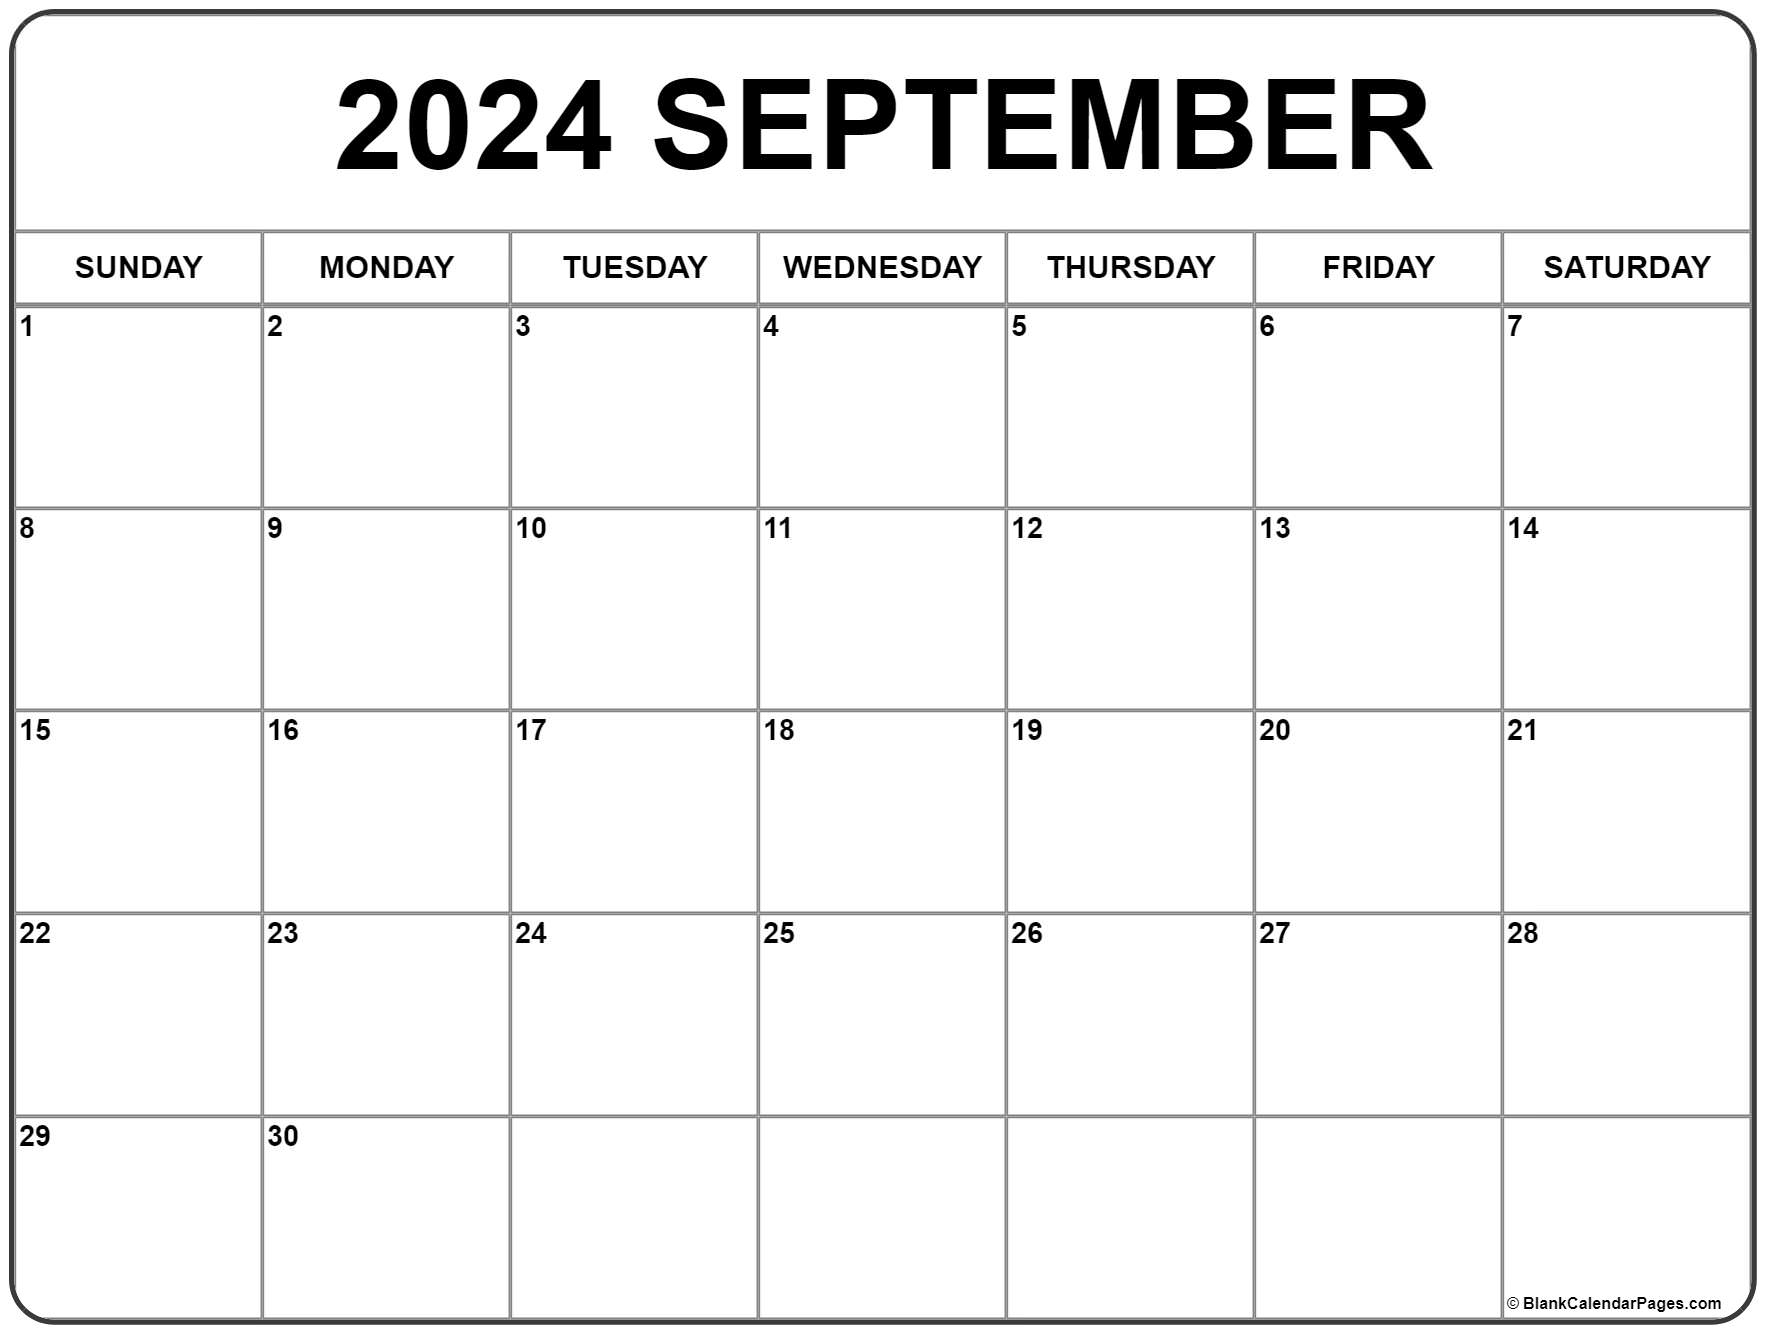 September 2024 Calendar | Free Printable Calendar for Sept 2024 Calendar Printable Free